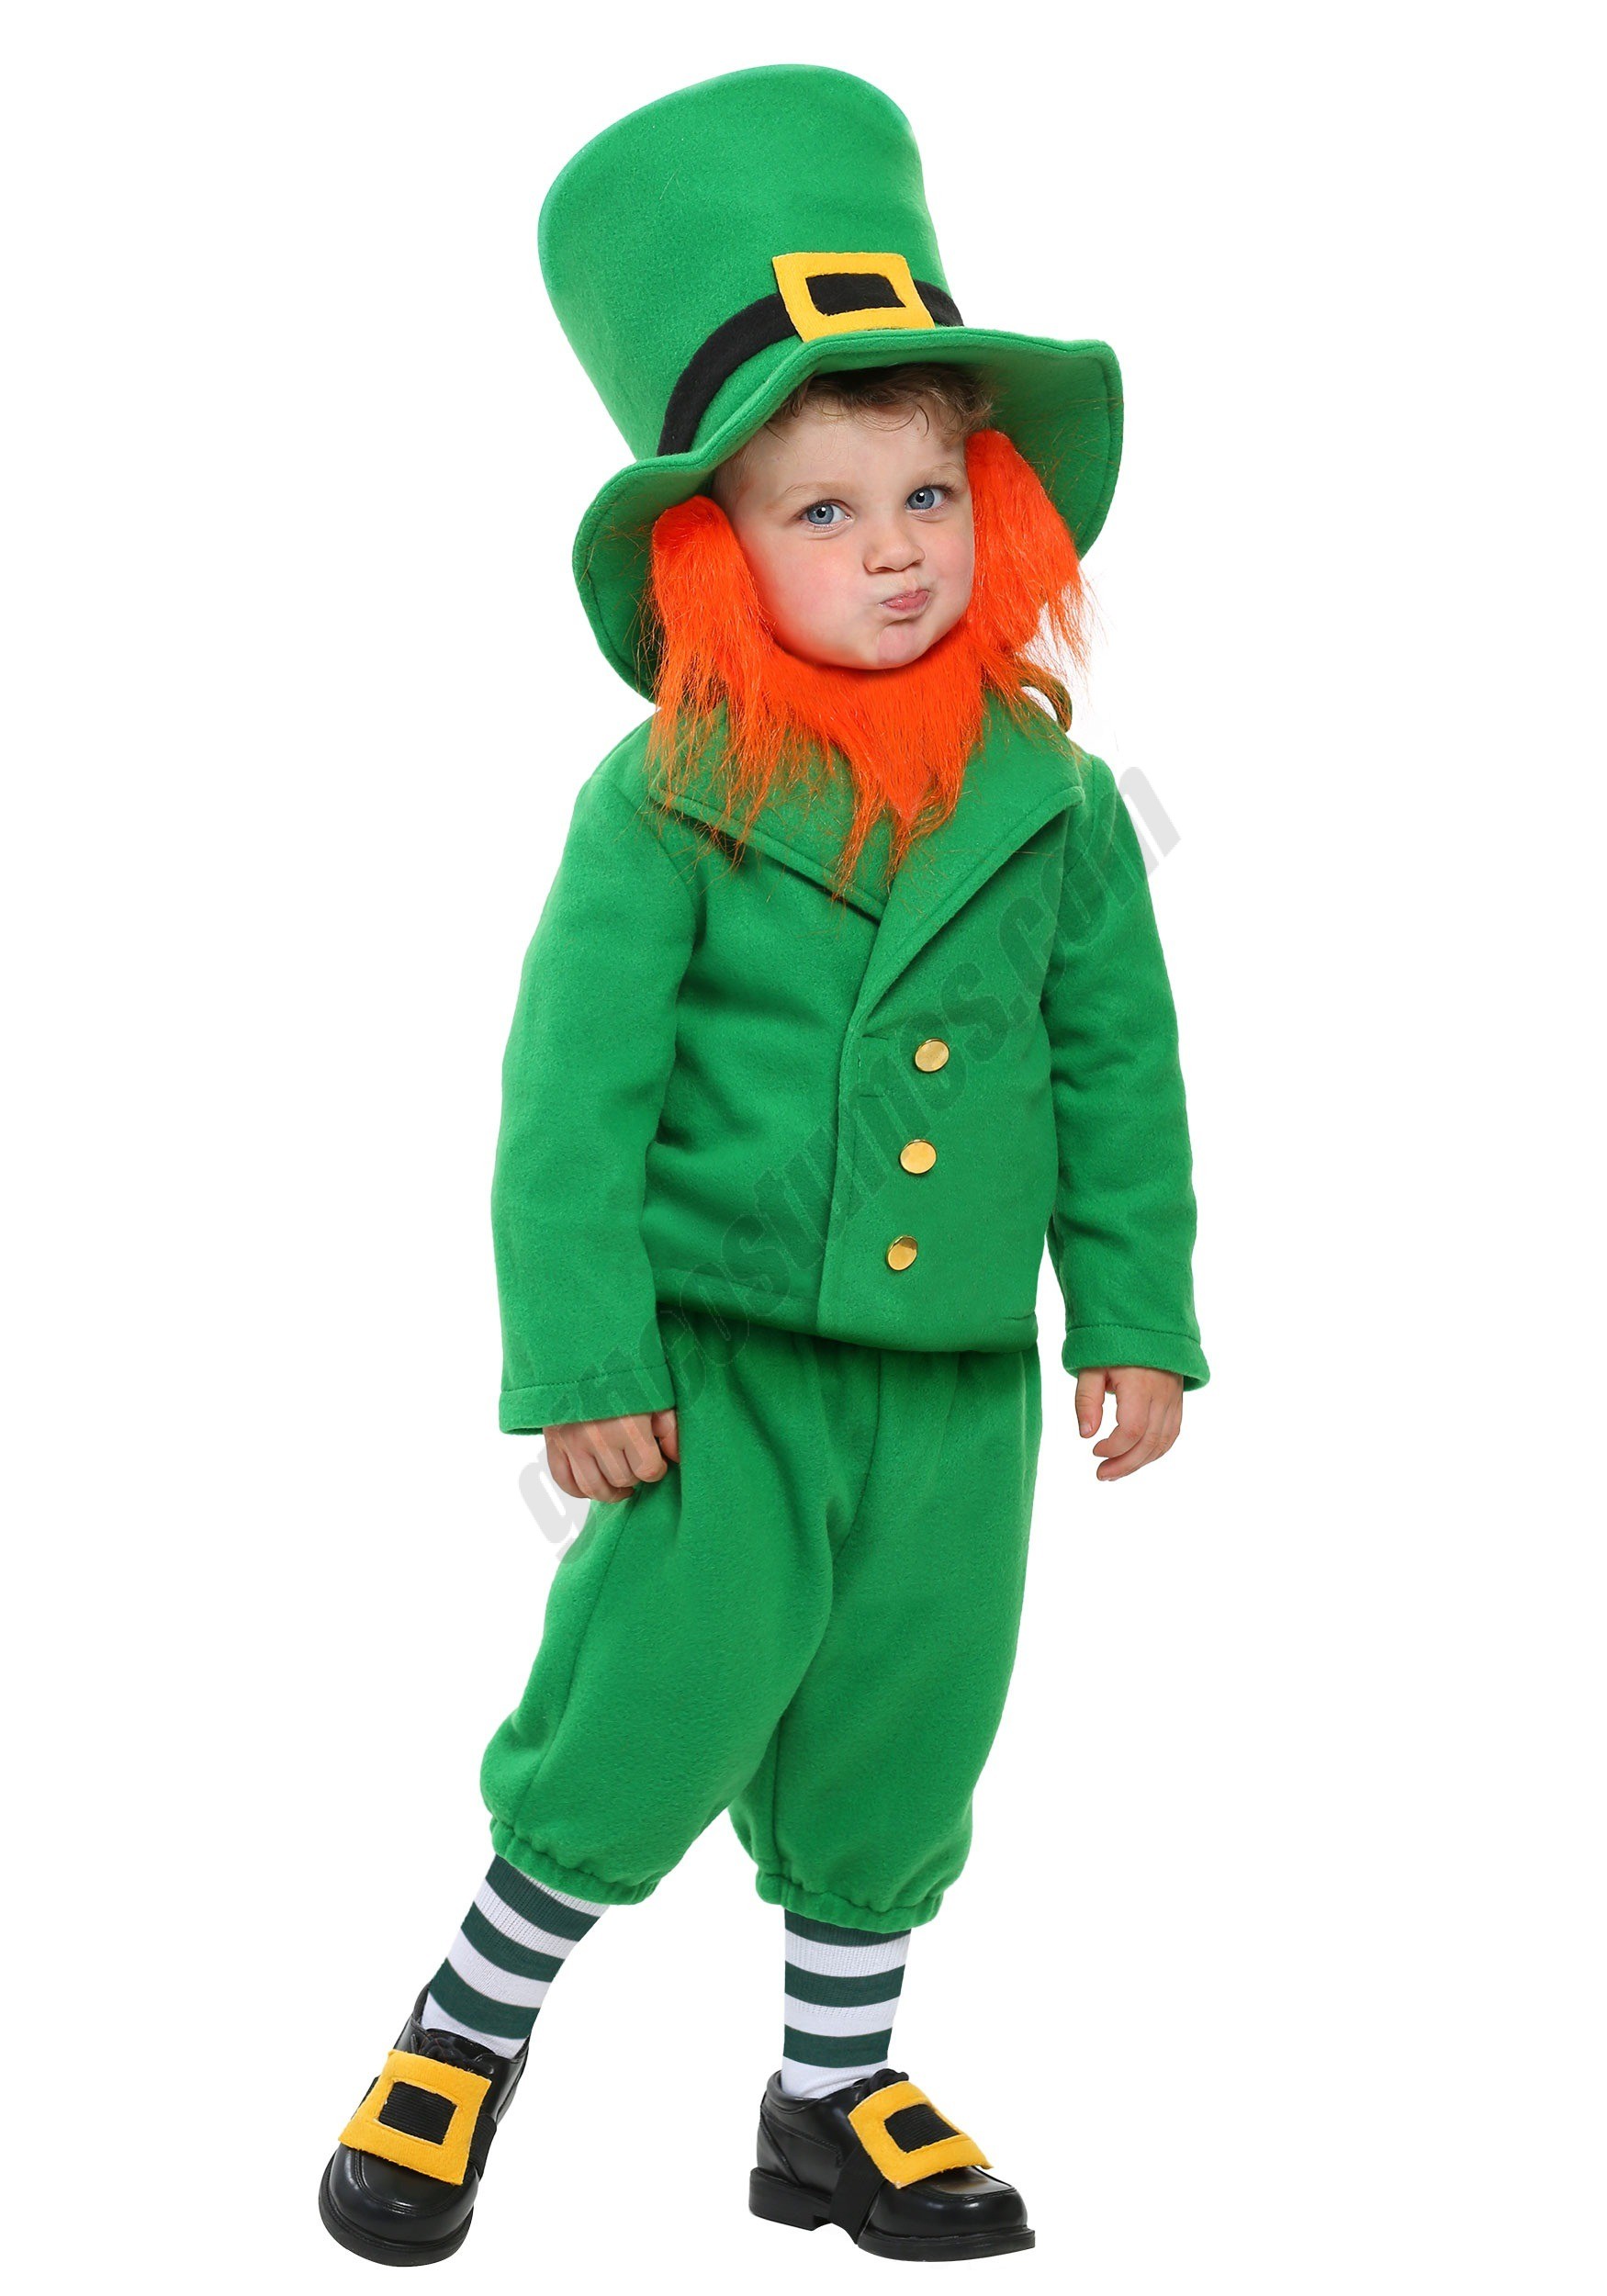 Toddler Wee Little Leprechaun Costume Promotions - Toddler Wee Little Leprechaun Costume Promotions